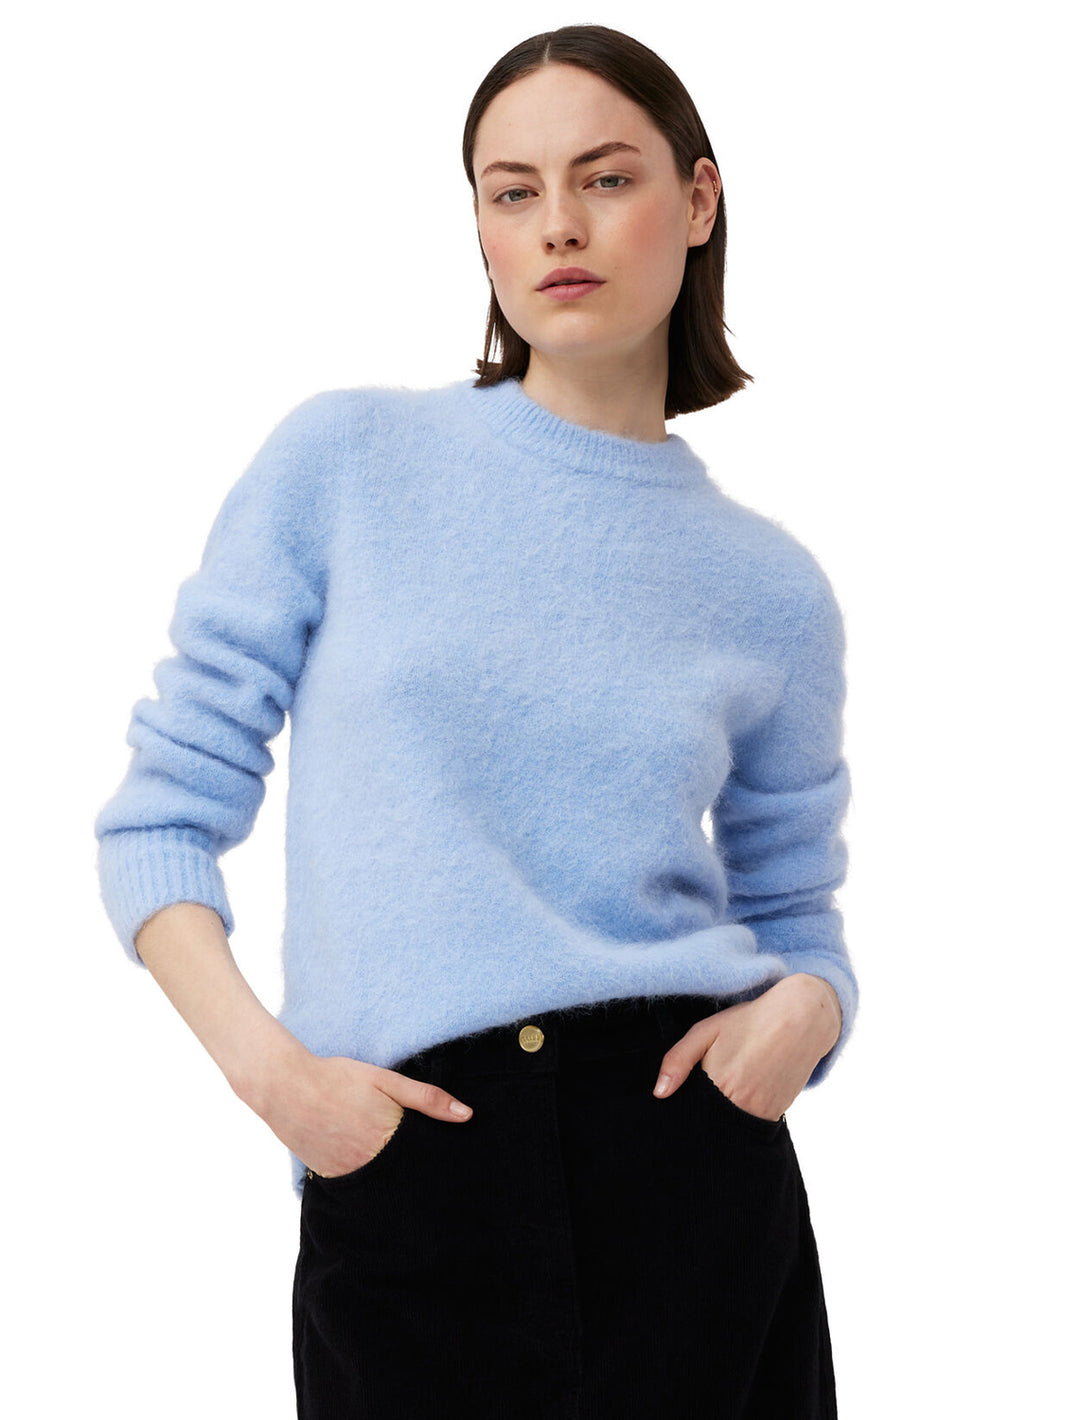 Model wearing GANNI's brushed alpaca o-neck pullover in powder blue.